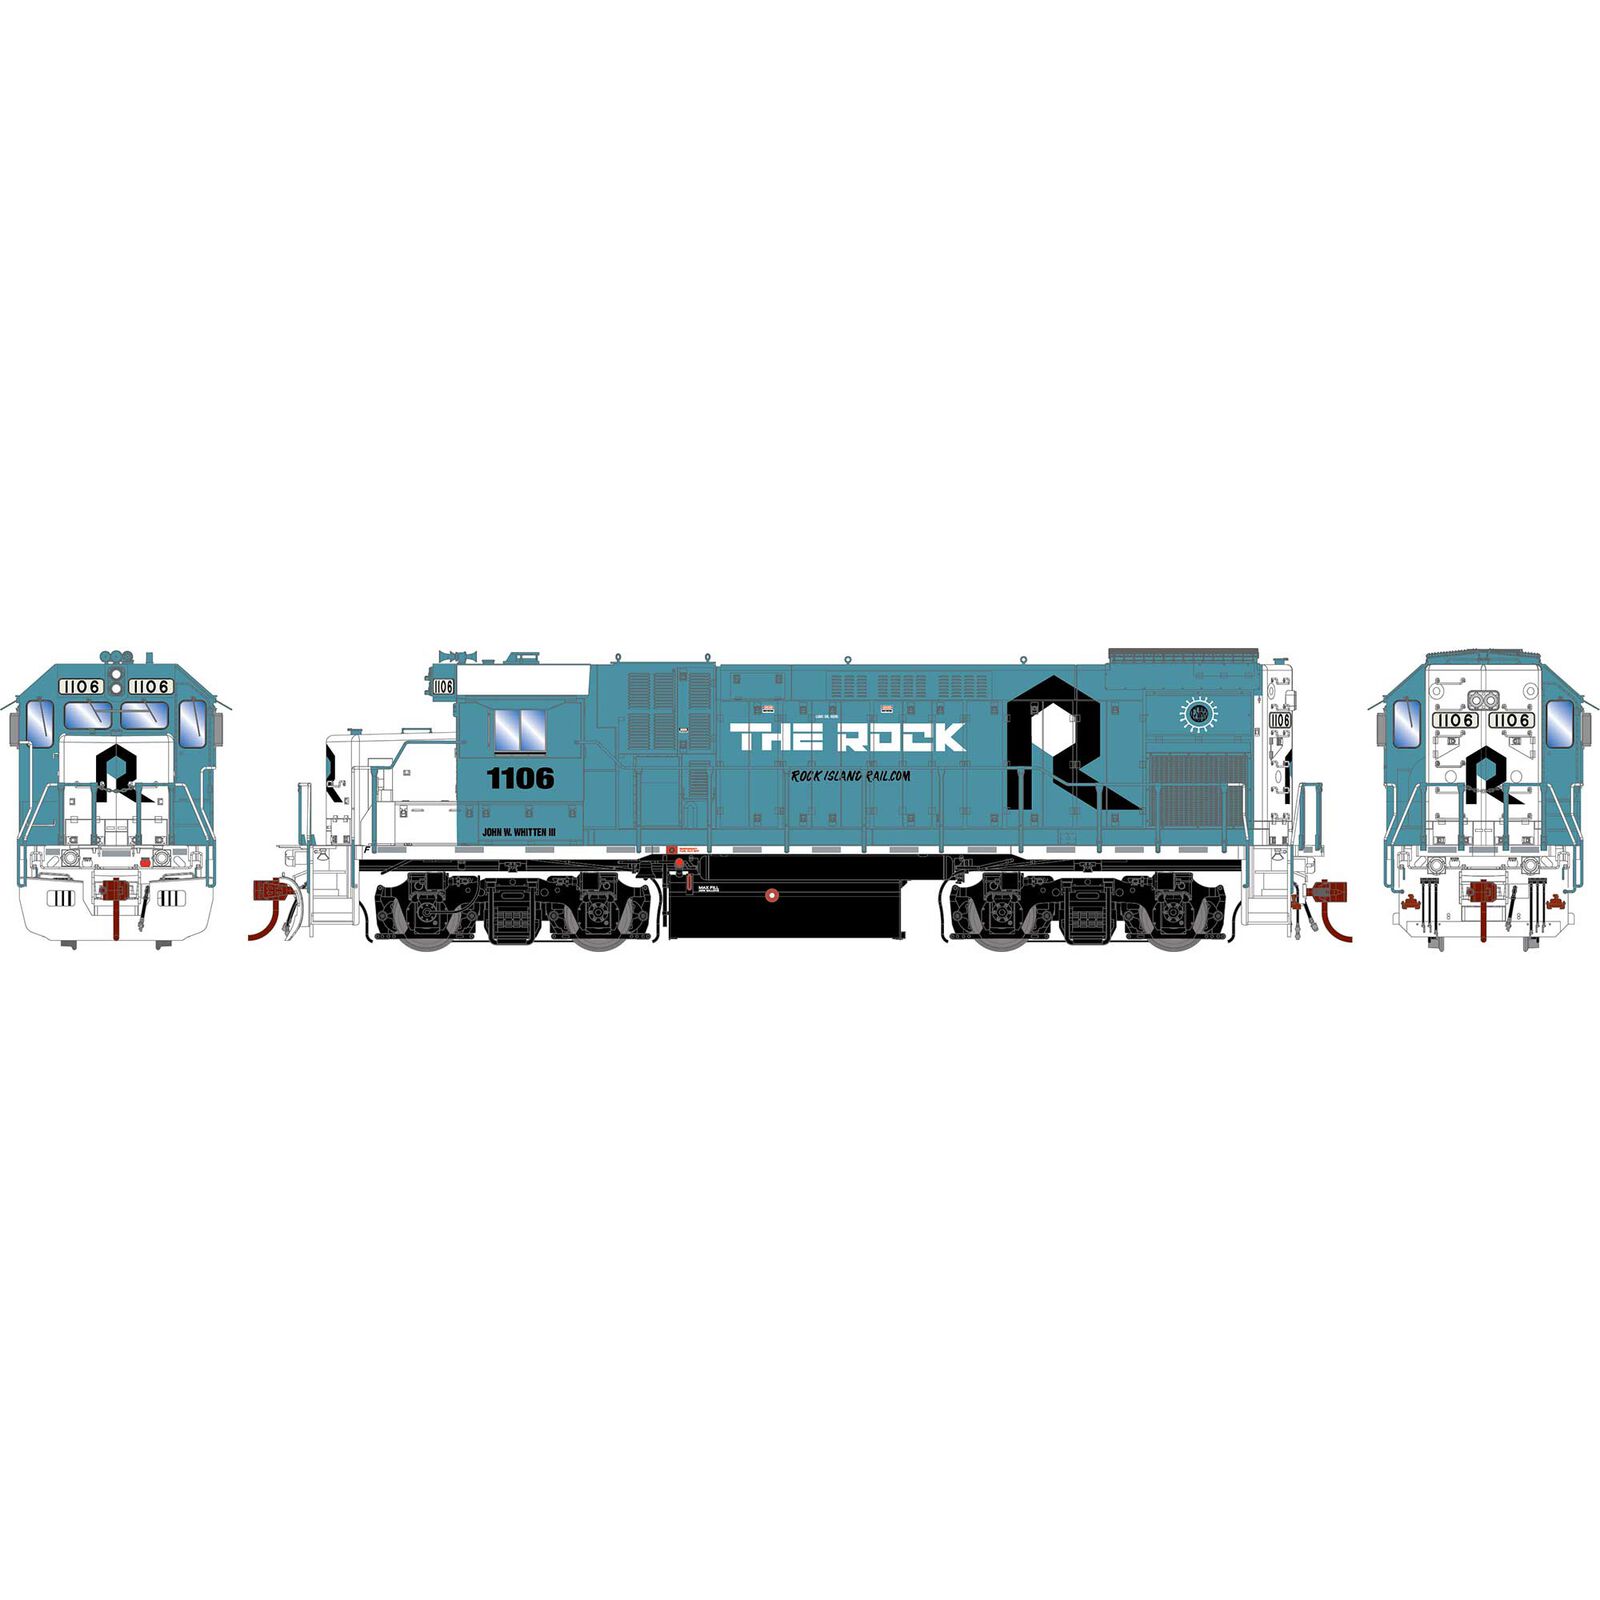 HO GP15-1 Locomotive with DCC & Sound, Rock Island Rail #1106